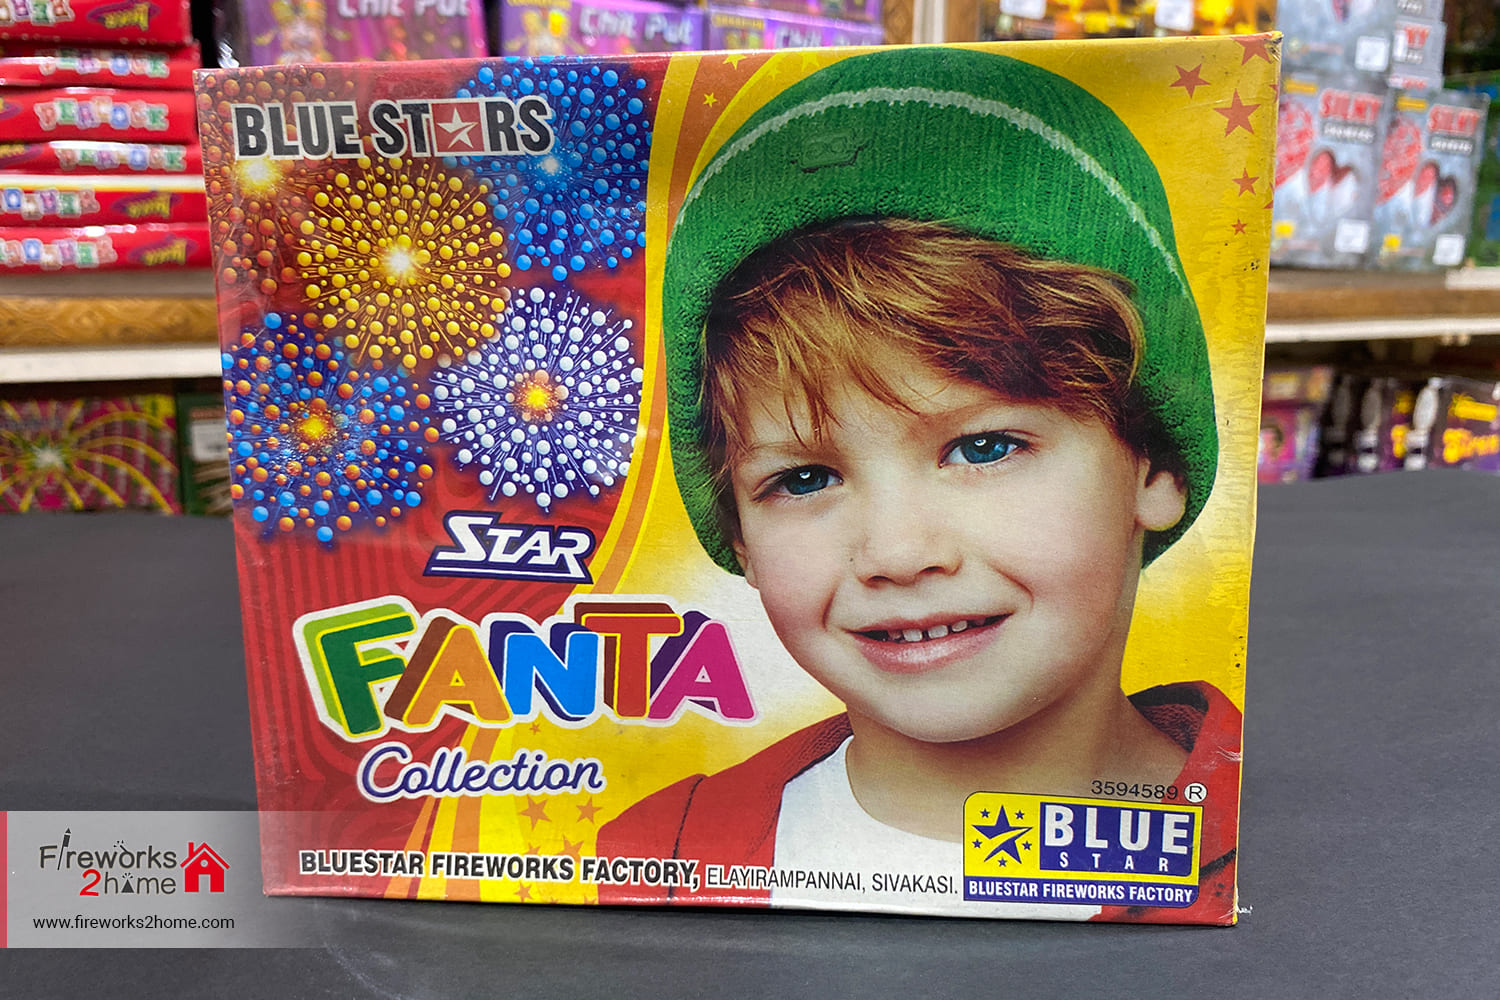 star-fanta-collection-blue-stars